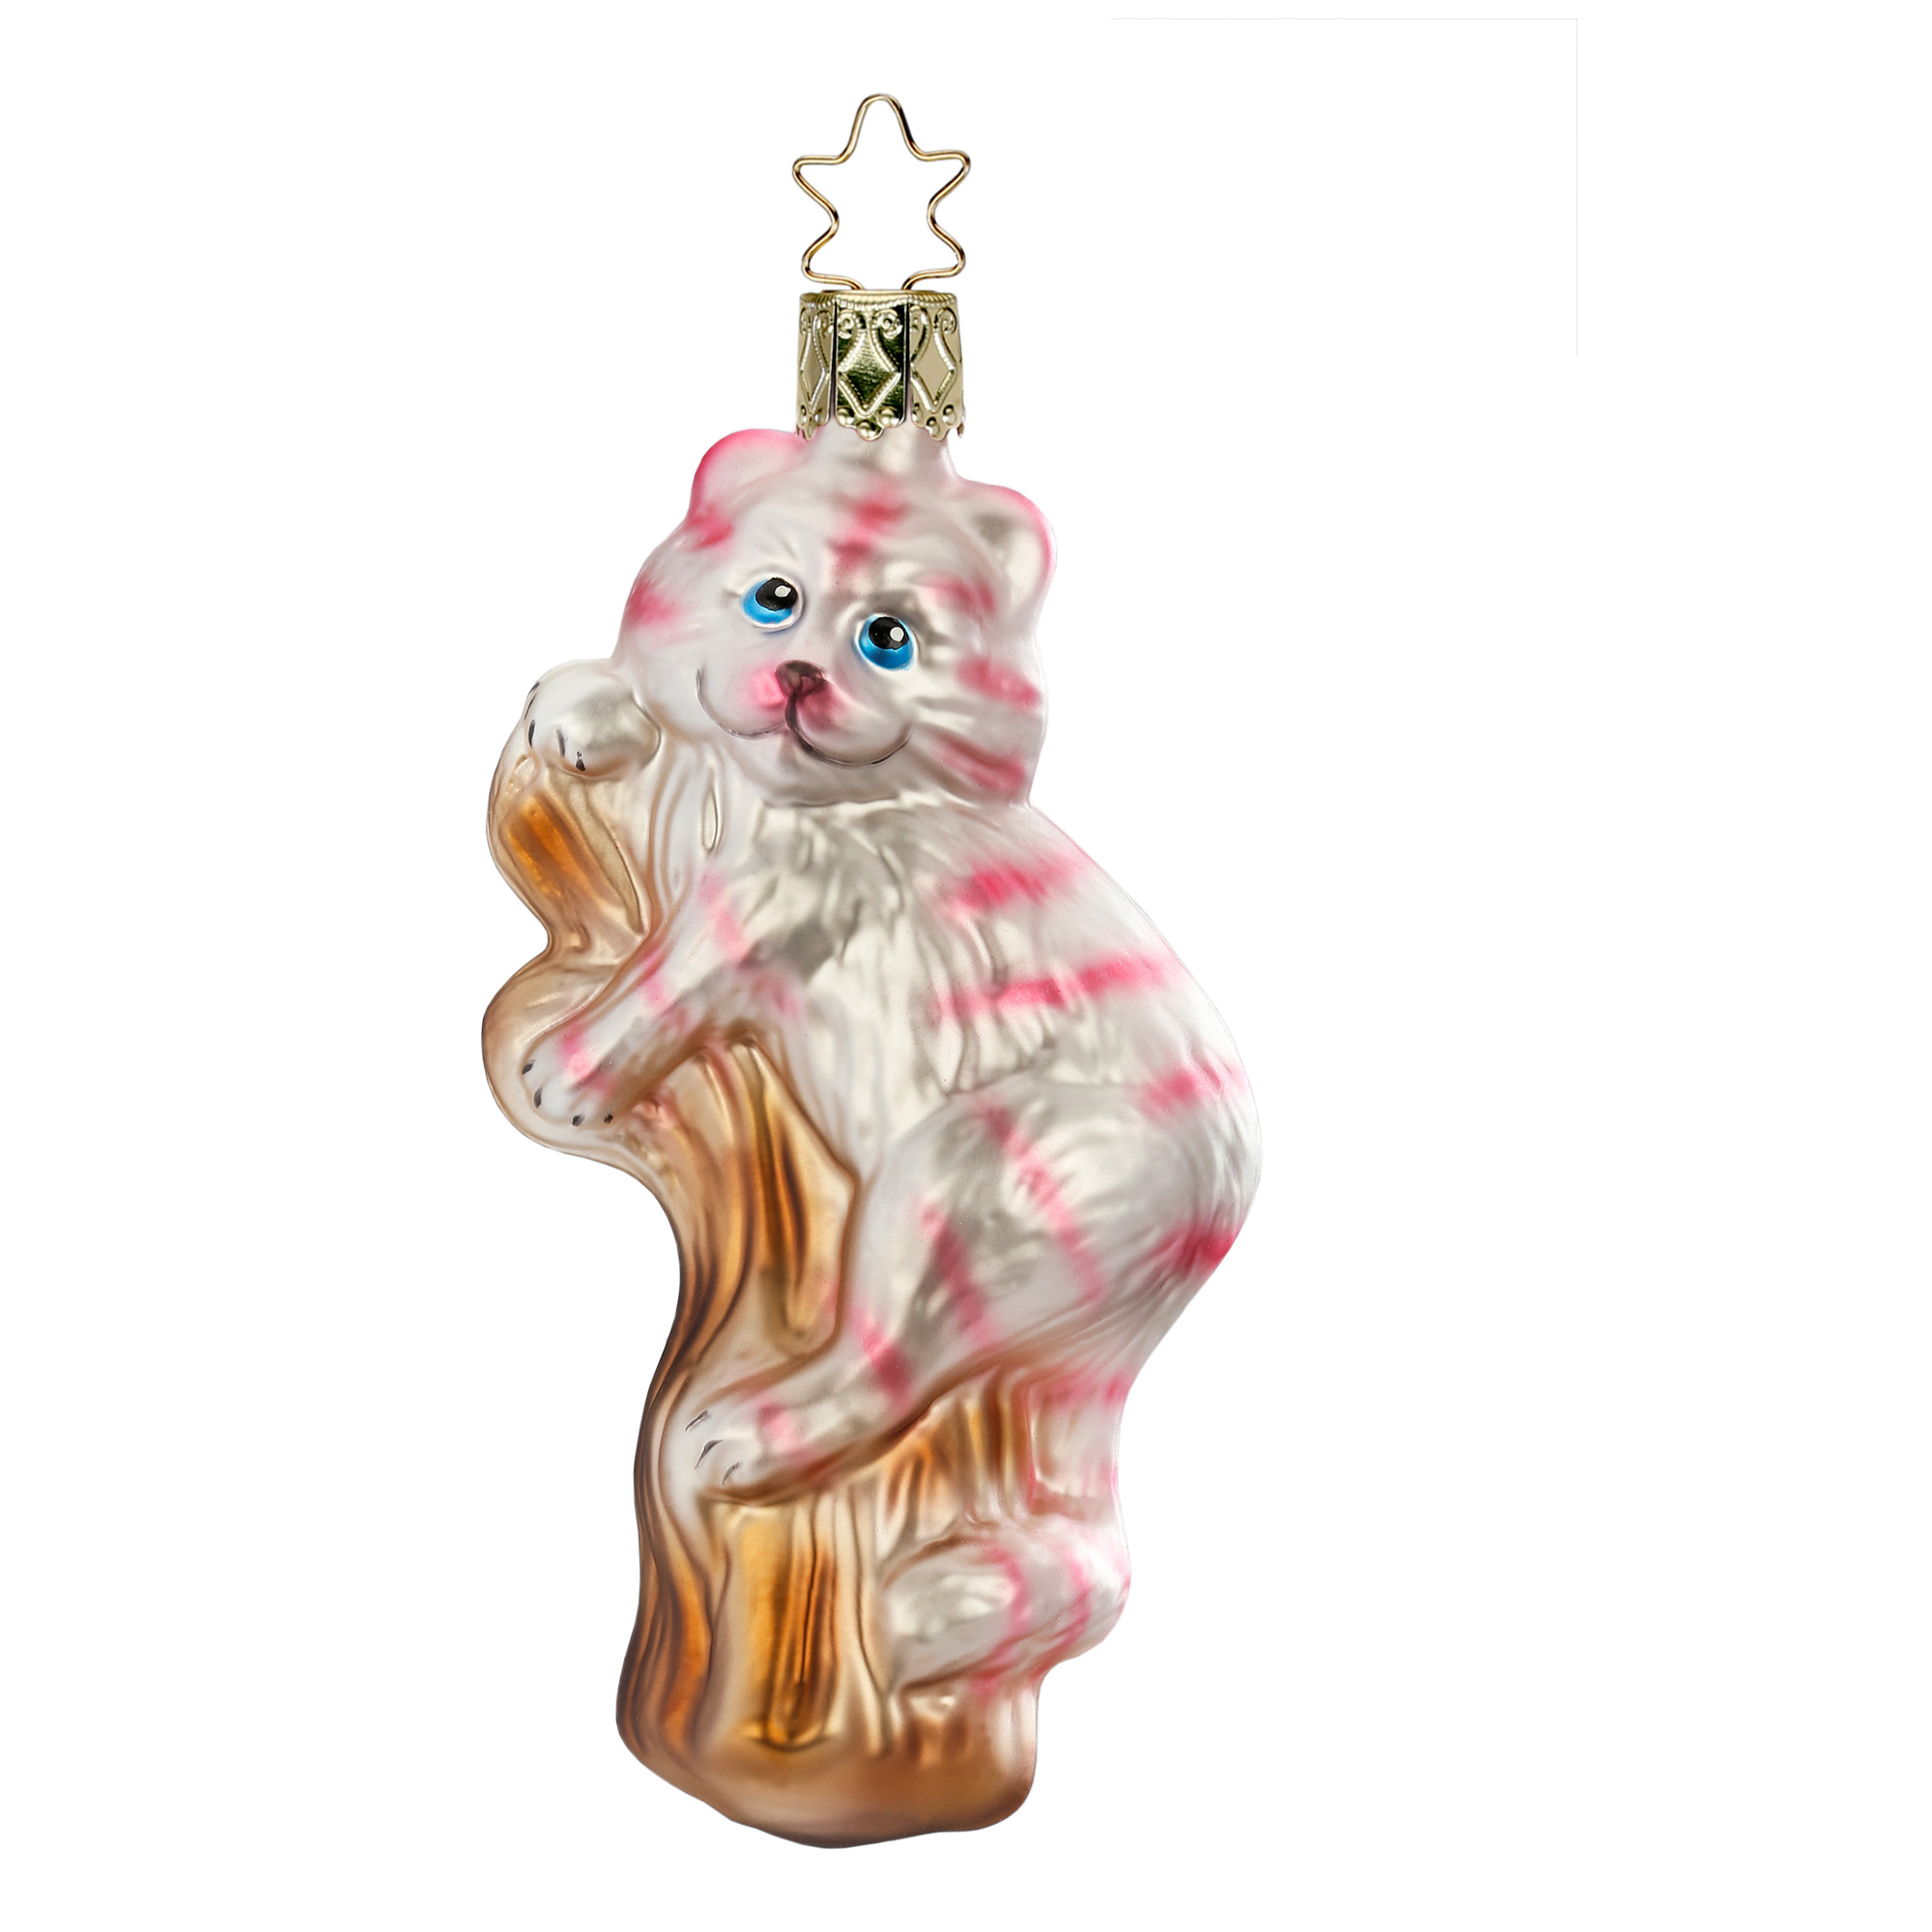 Inge Glas Christbaumkugel "Grinsender Kater" Verrückte Teeparty, ca. 11 cm, Weihnachtskugel Katze 